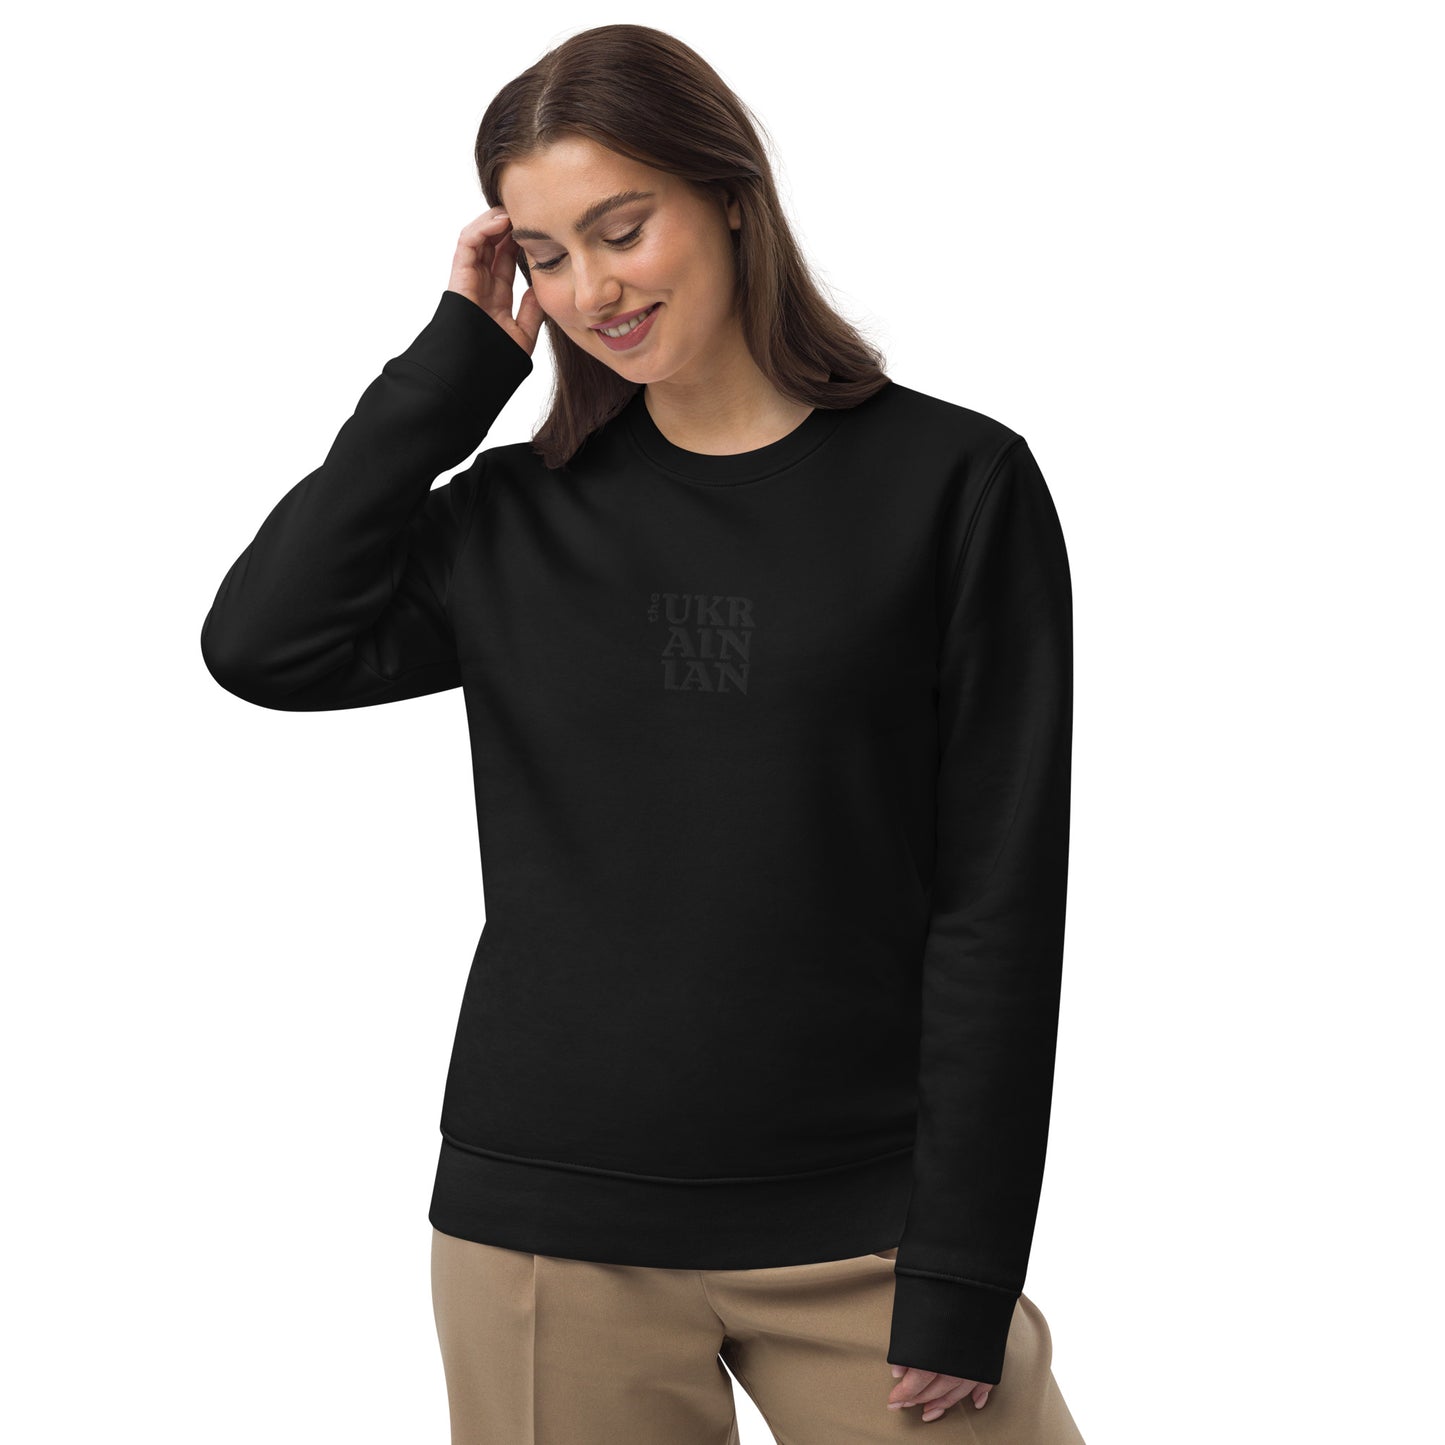 The Ukrainian embroidered unisex eco sweatshirt in black